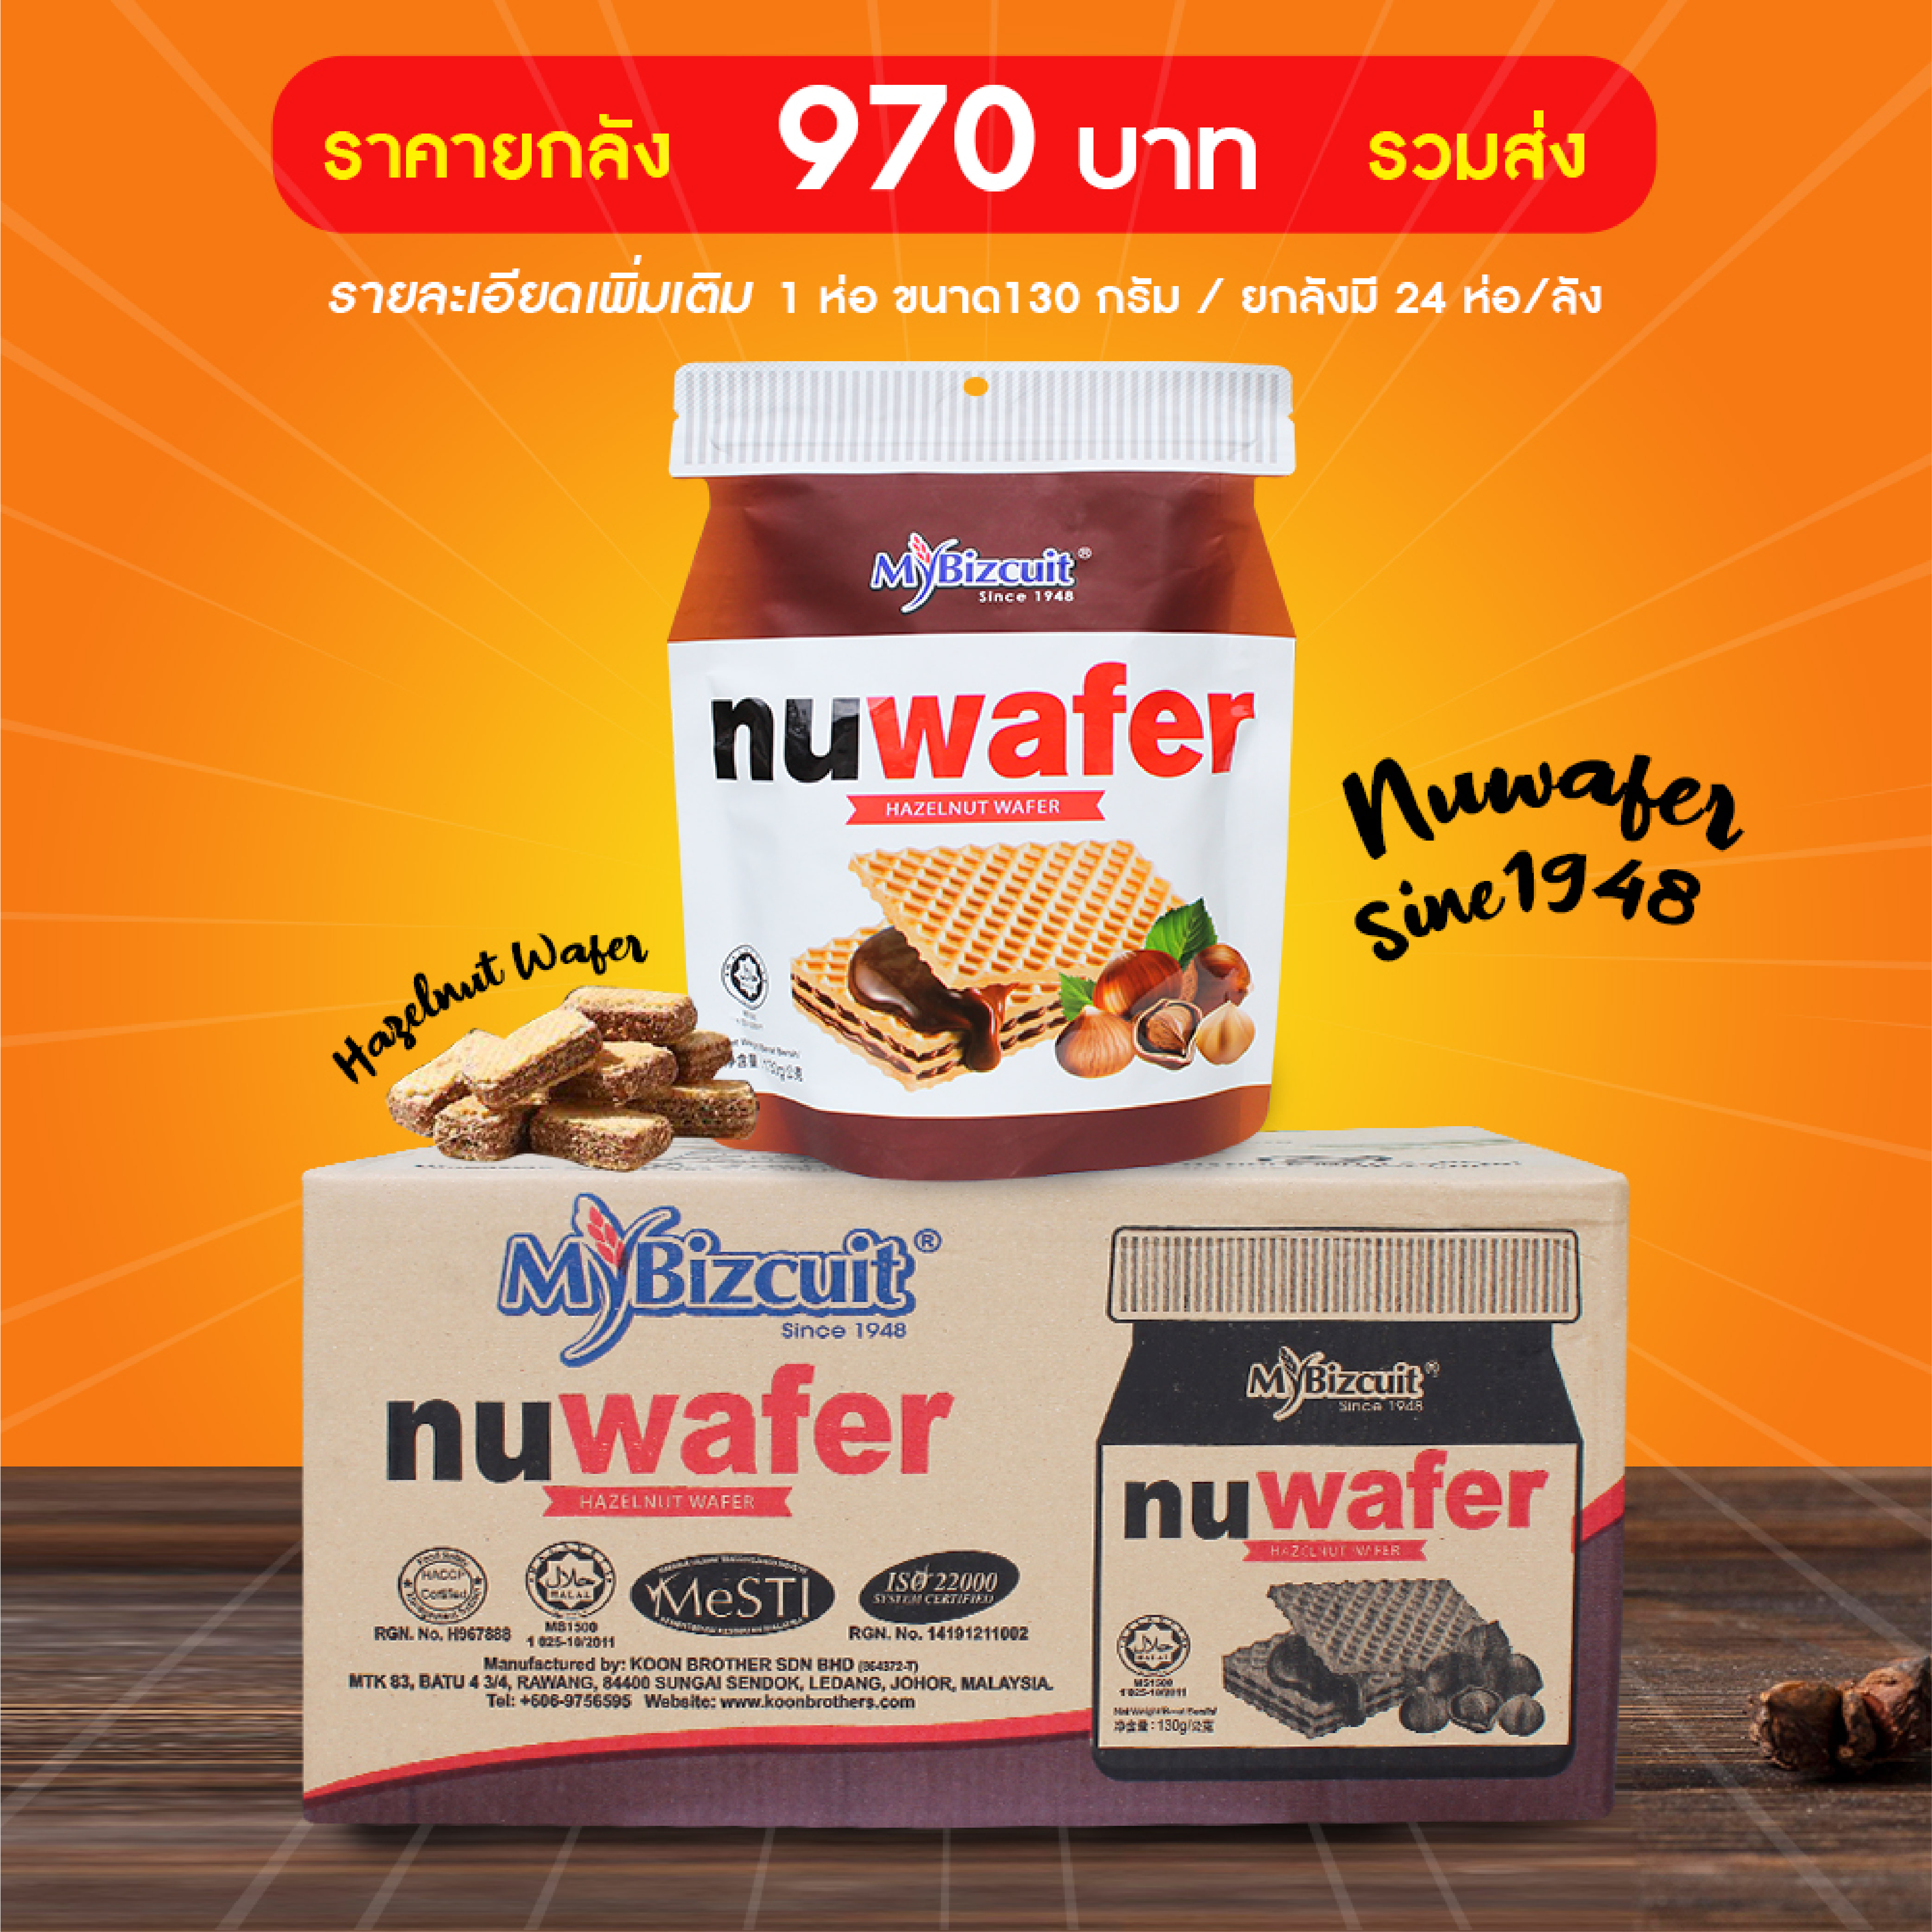 Nuwafer Mybizcuit เวเฟอร์สอดไส้ช็อกโกแลตฮัลเซลนัท 130 กรัม ไฉไล อินเตอร์เทรด บริษัทนำเข้าขนม